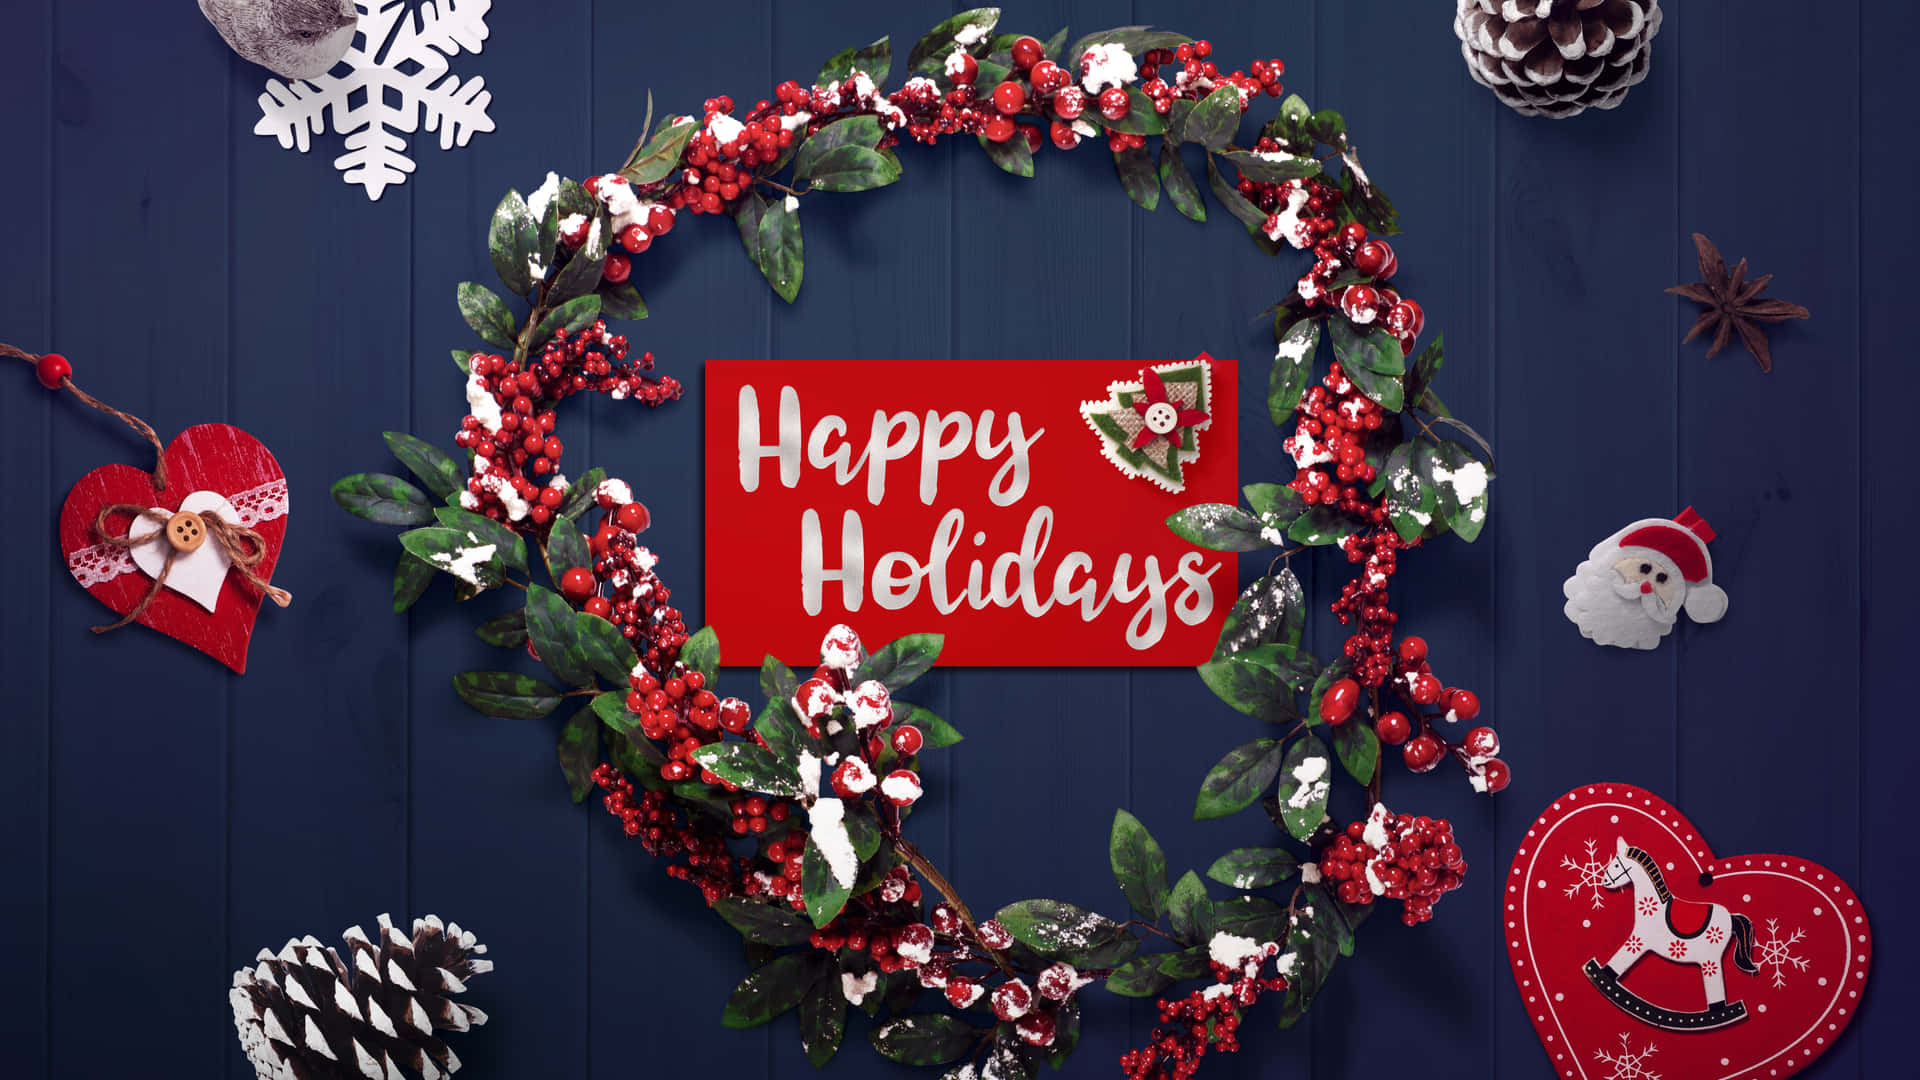 Celebrate the Holiday Season with a Festive Desktop Wallpaper